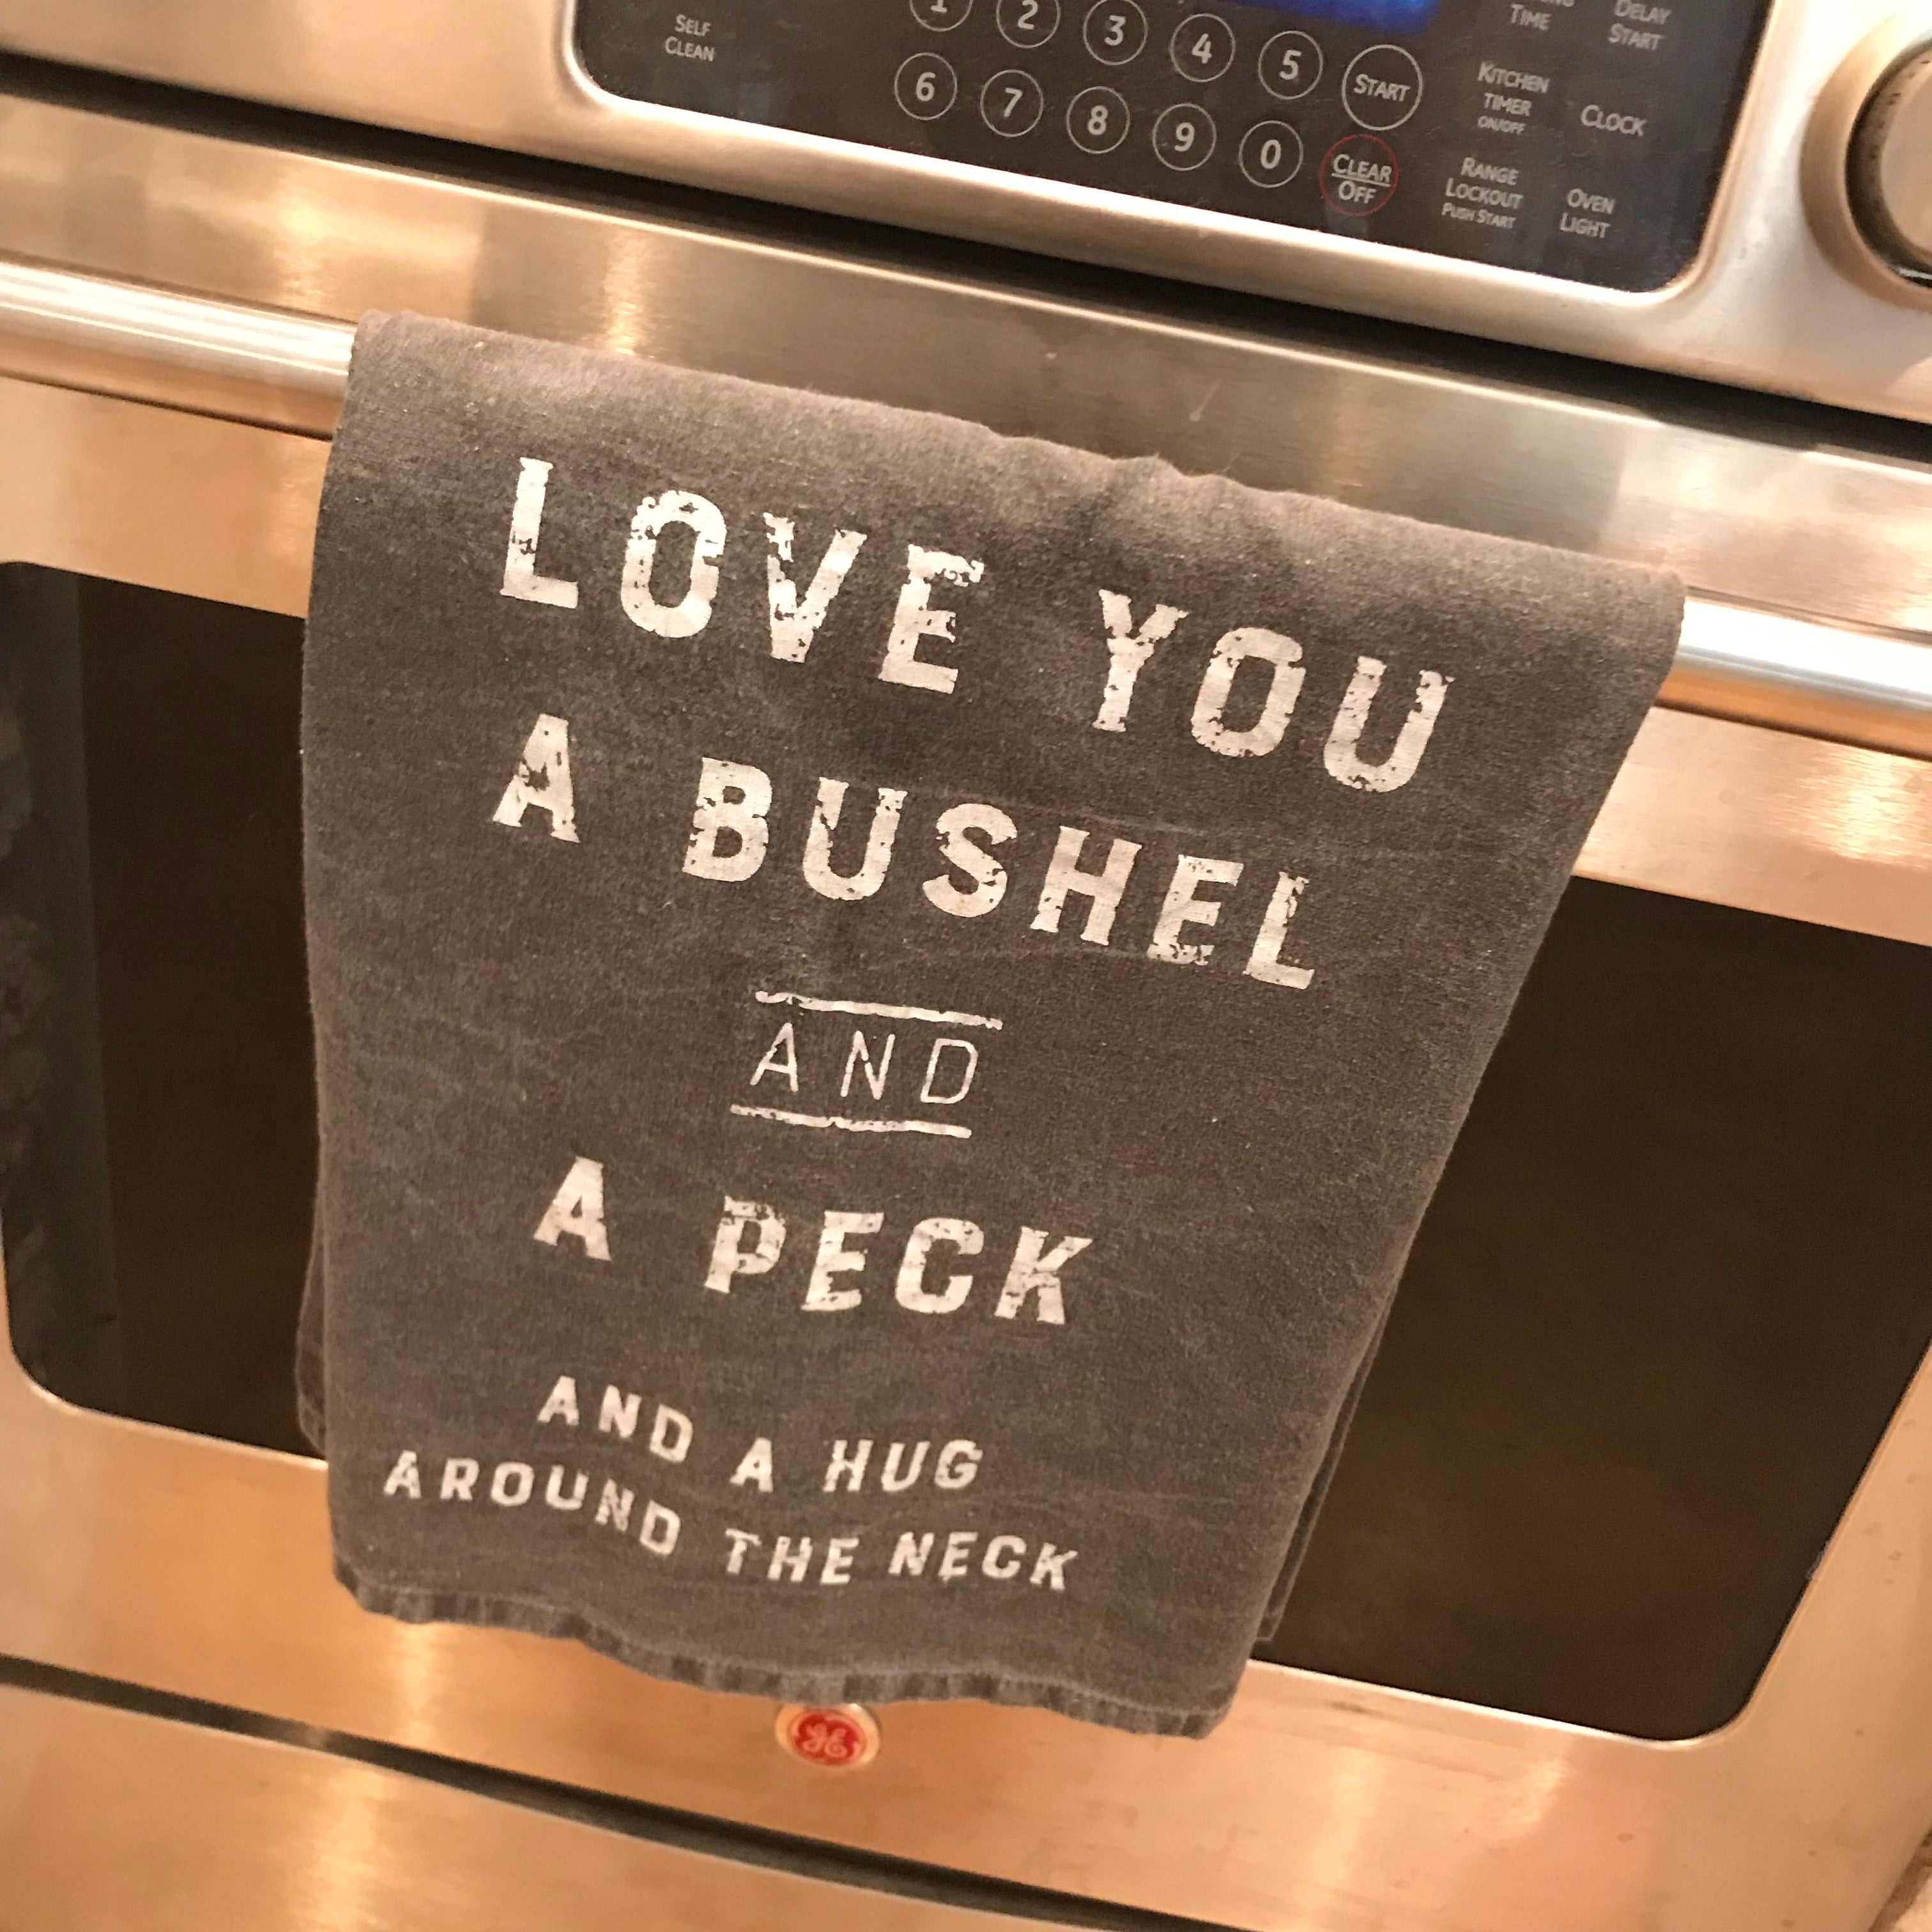 Kitchen, dish towel, bushel and a peck